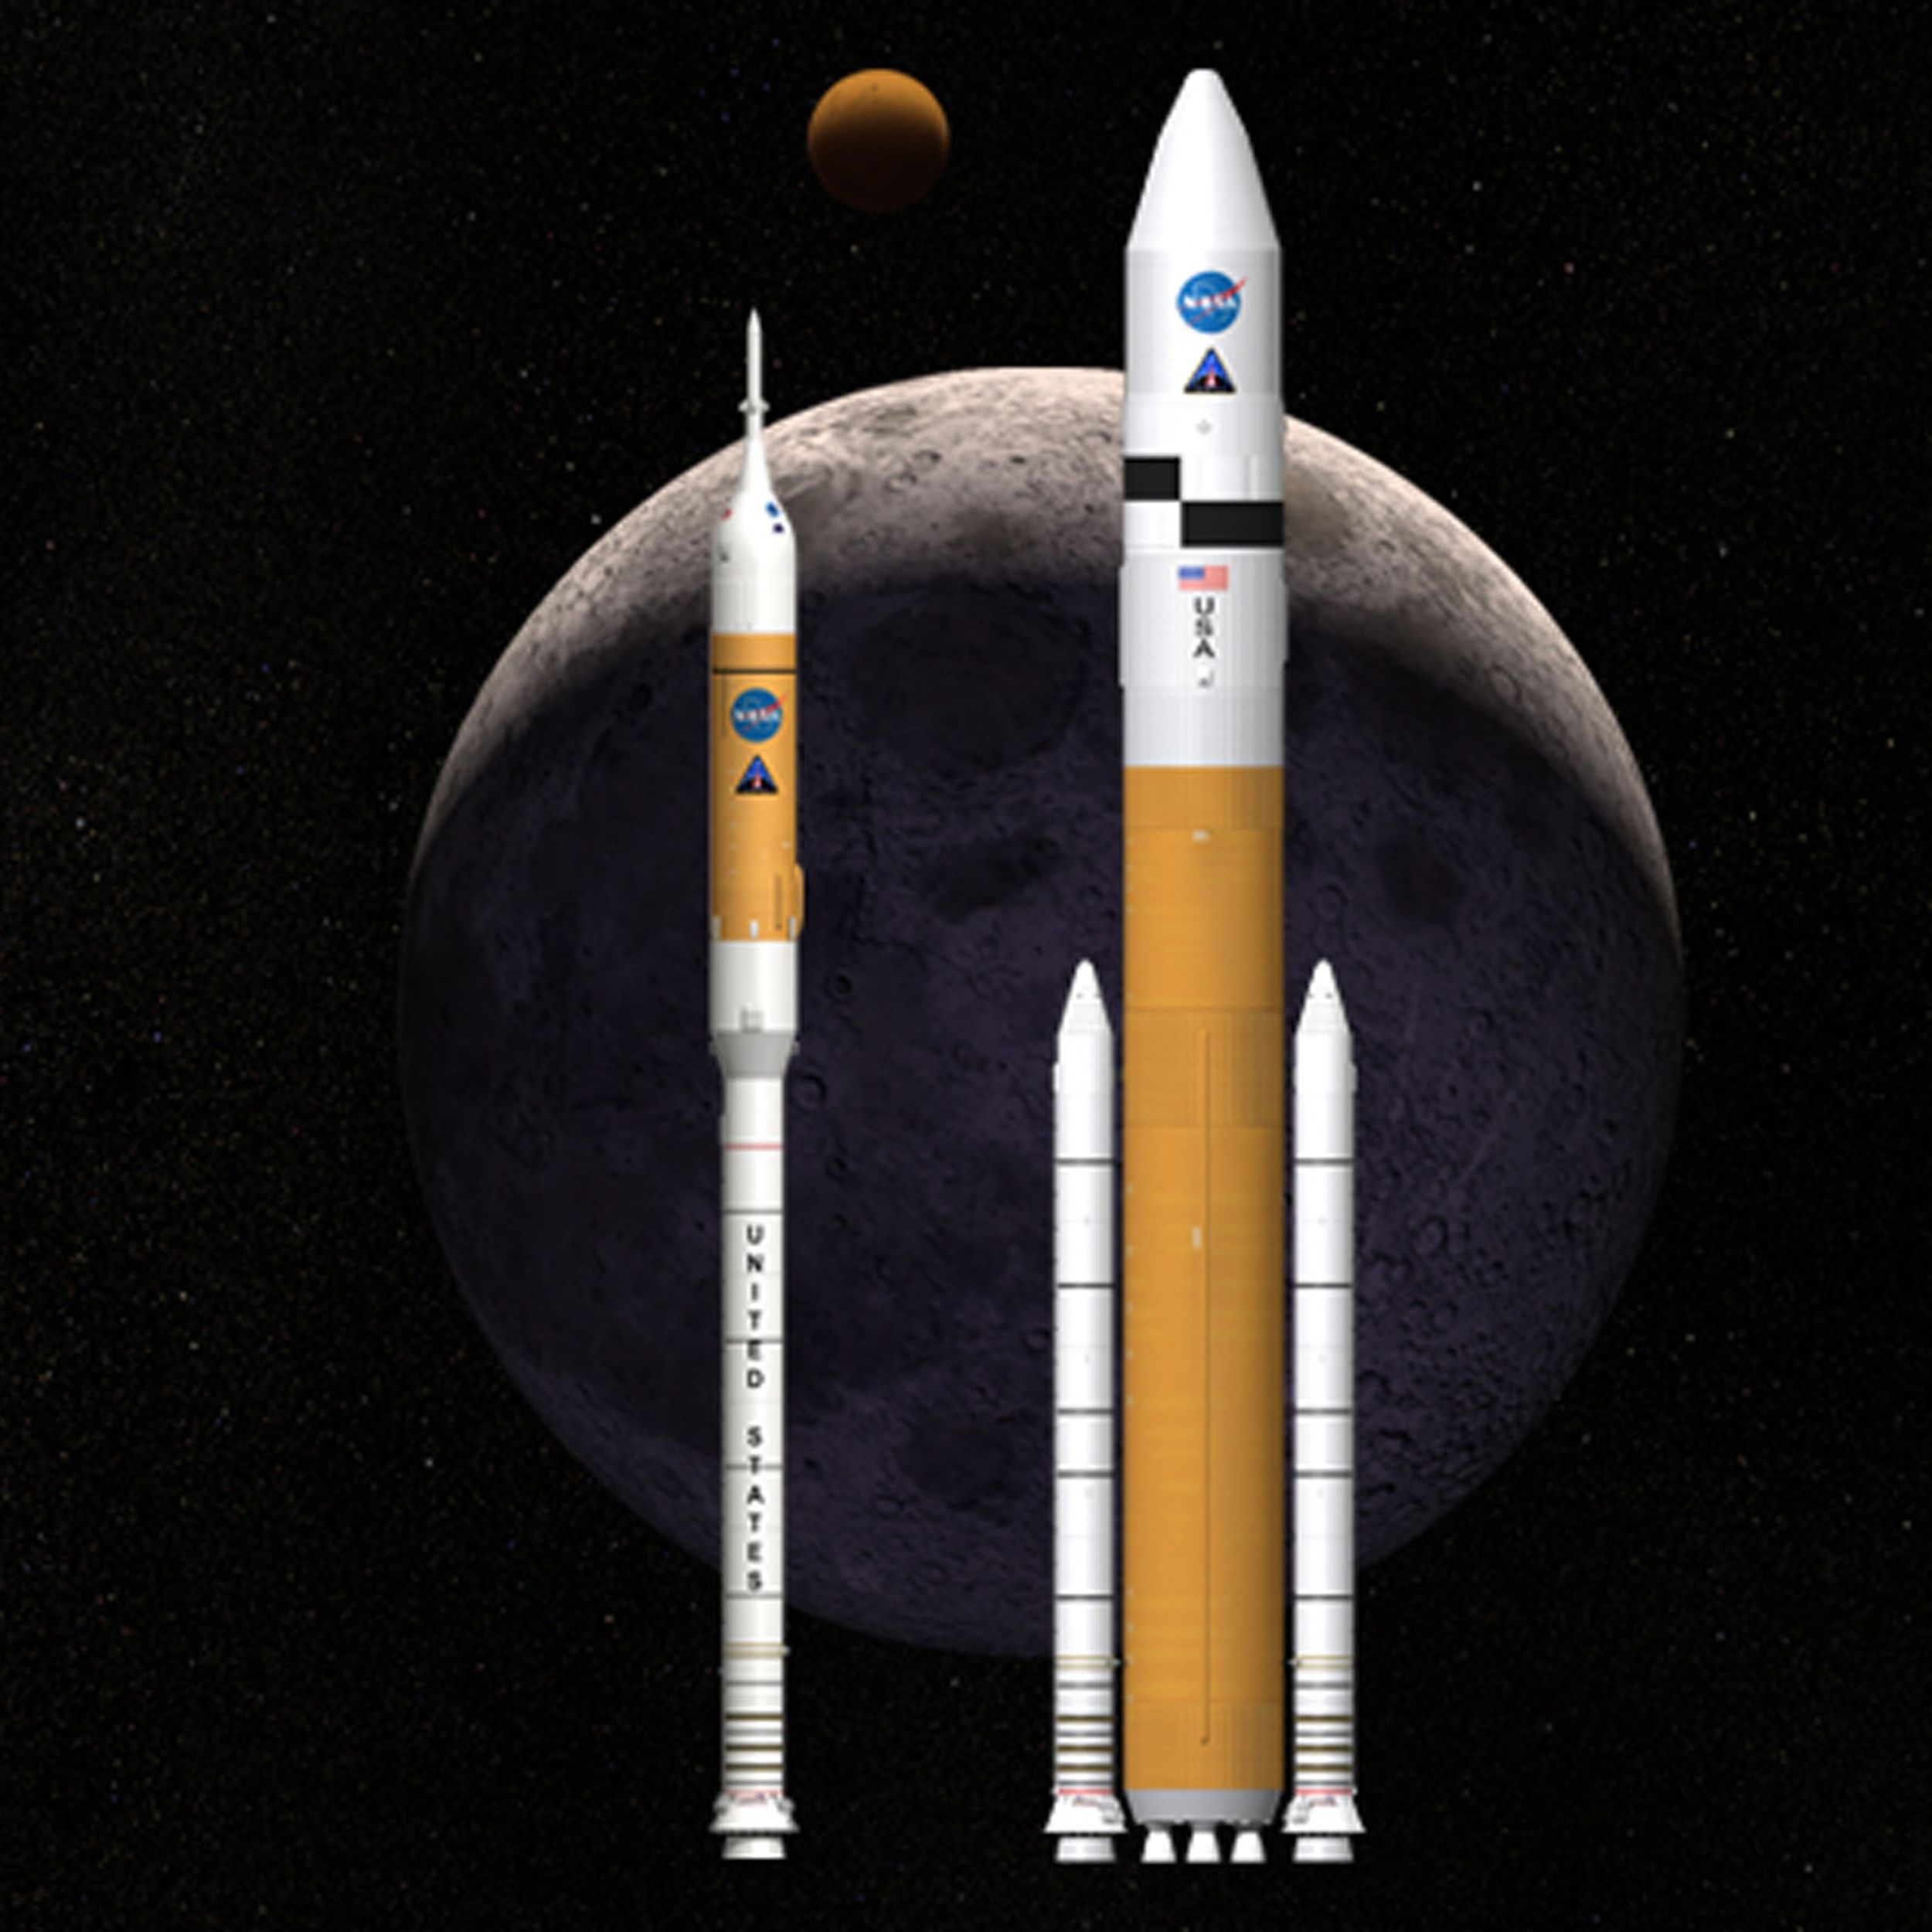 Ares 1 18 1. Арес 1 ракета. Космический транспорт. Луна ракета-носитель. Ракета НАСА.